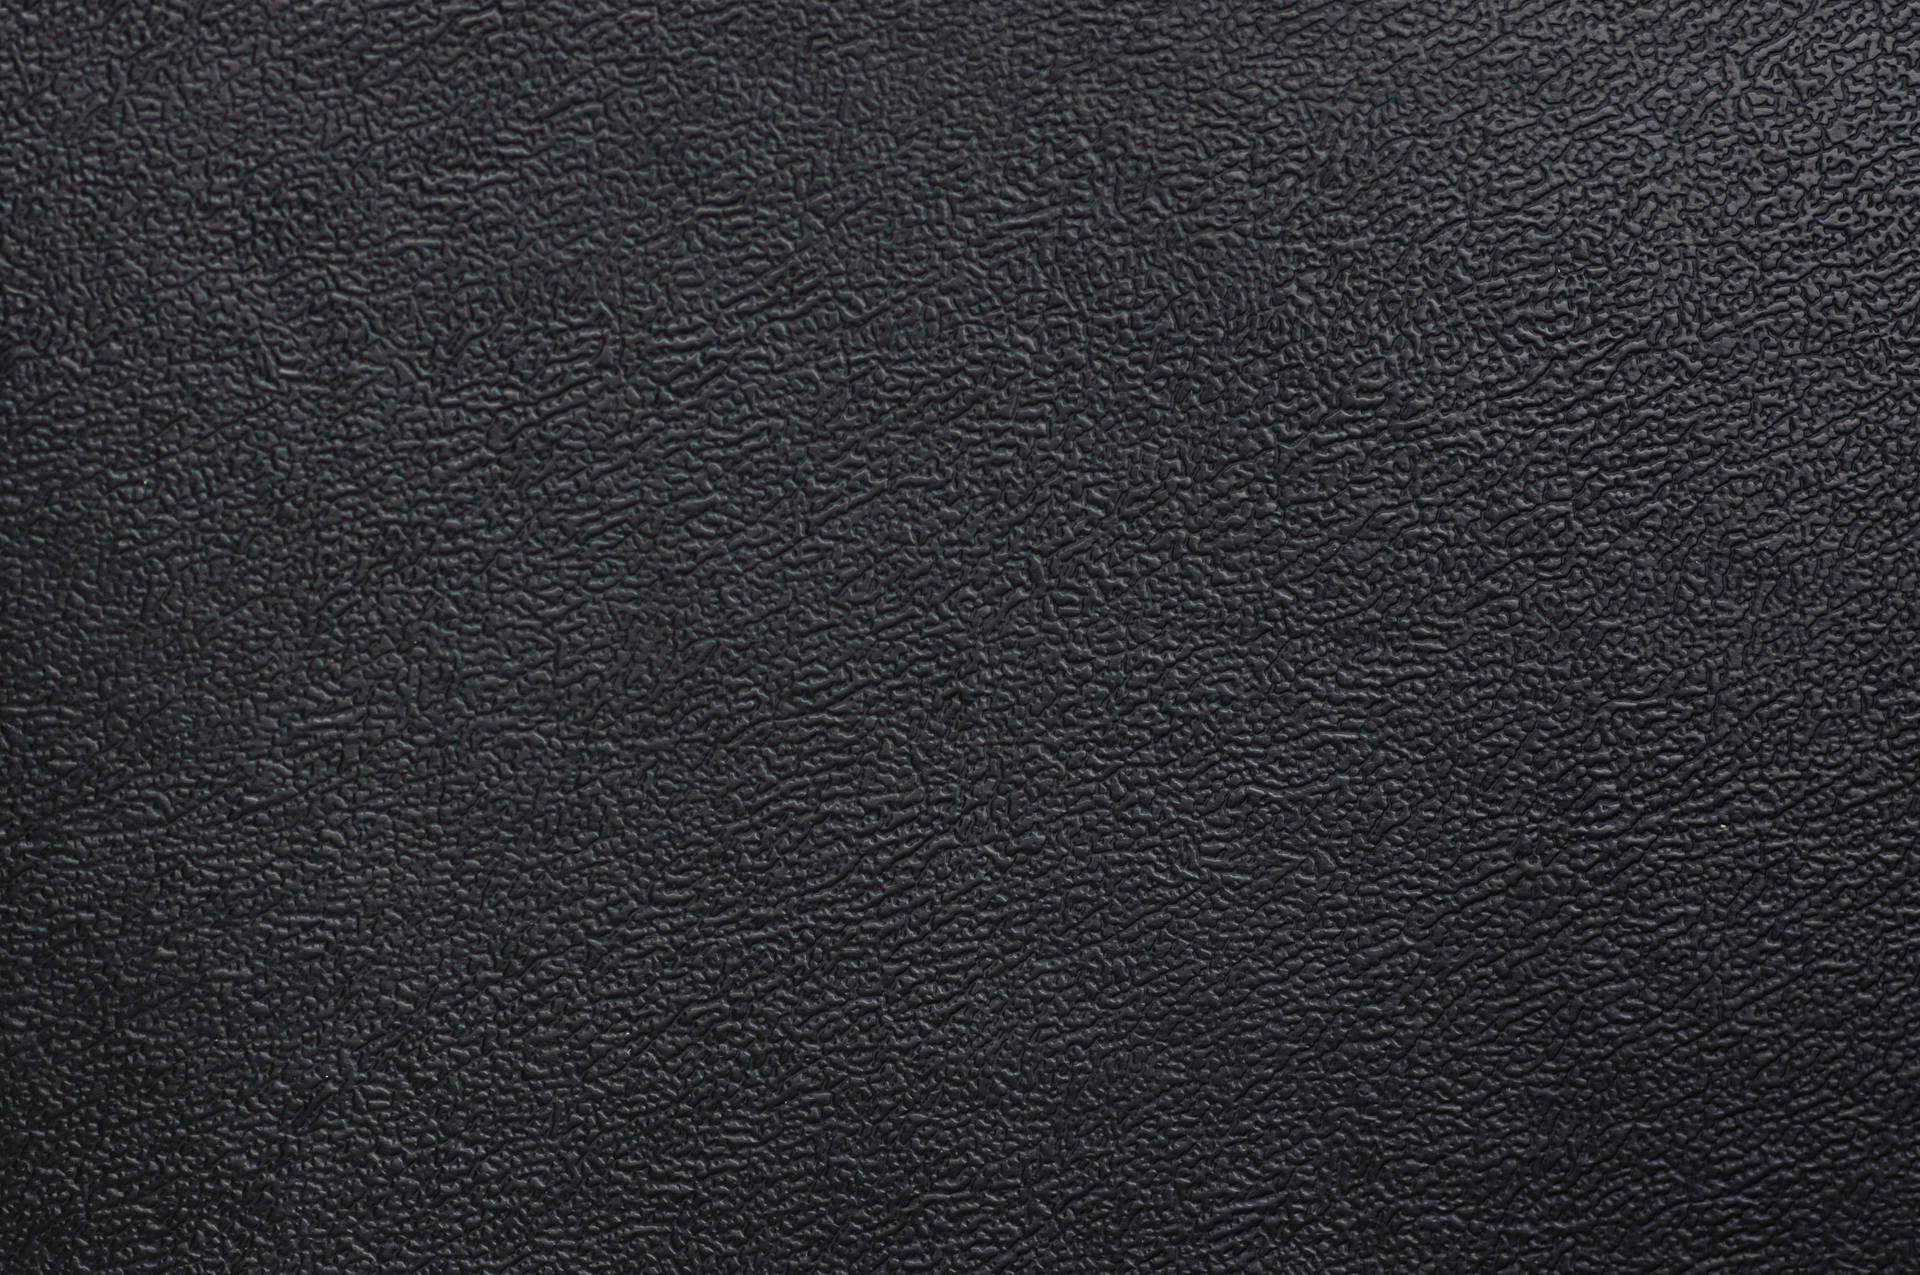 Textured Black Leather